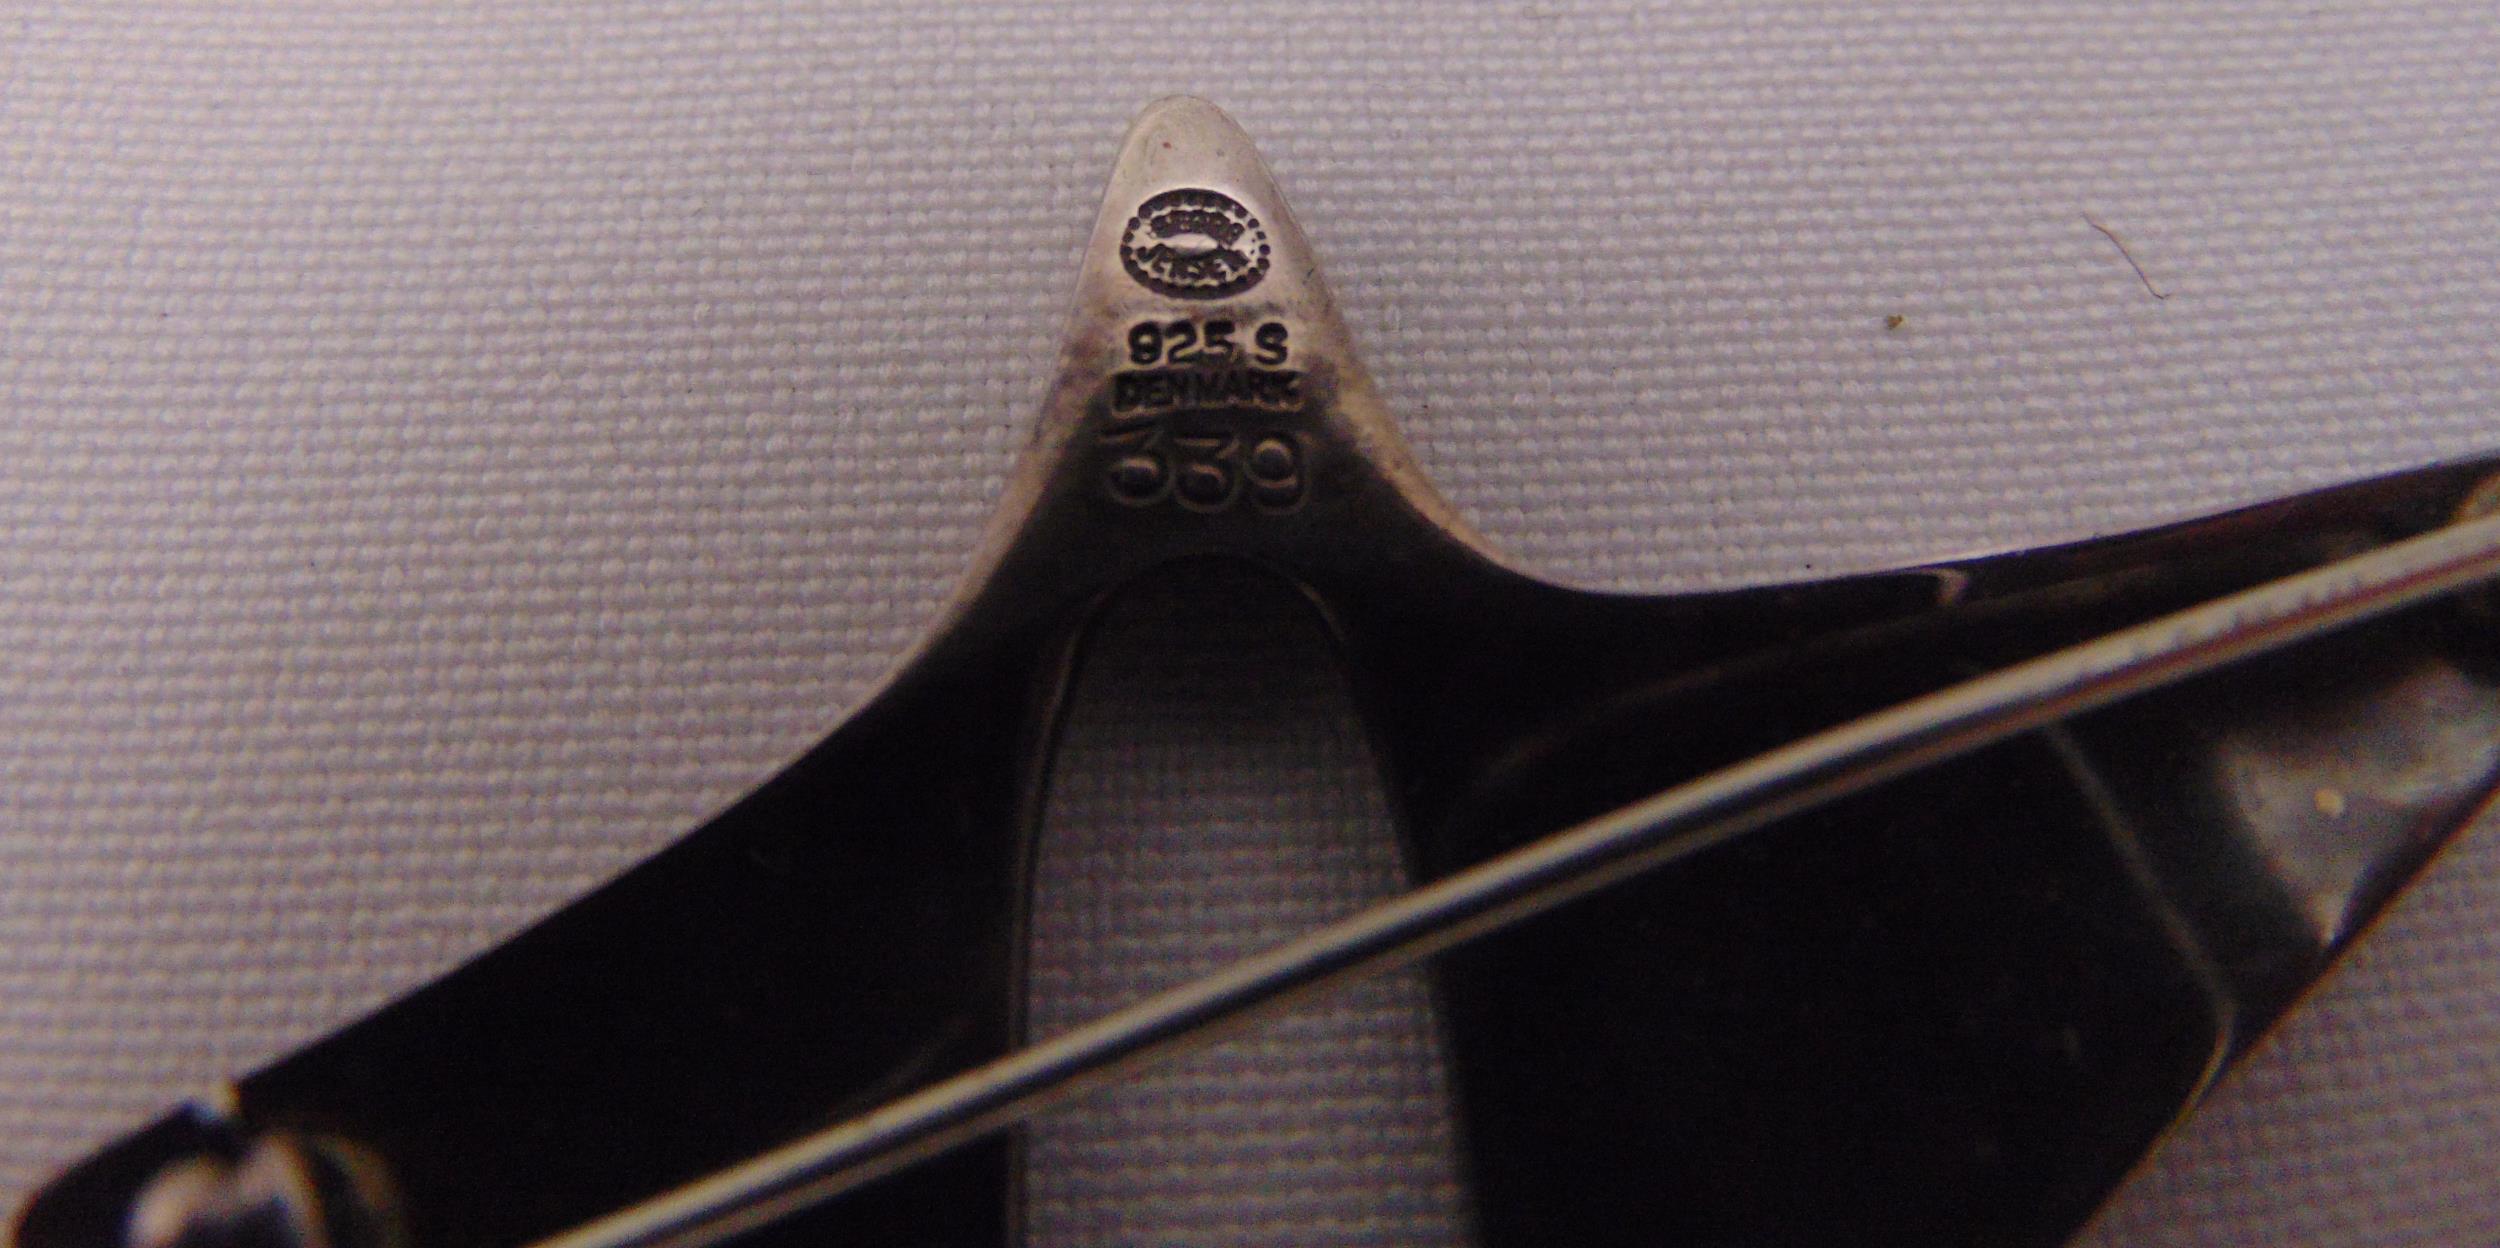 Vintage Georg Jensen hallmarked sterling silver star brooch # 339, designed by Henning Koppel - Image 2 of 2